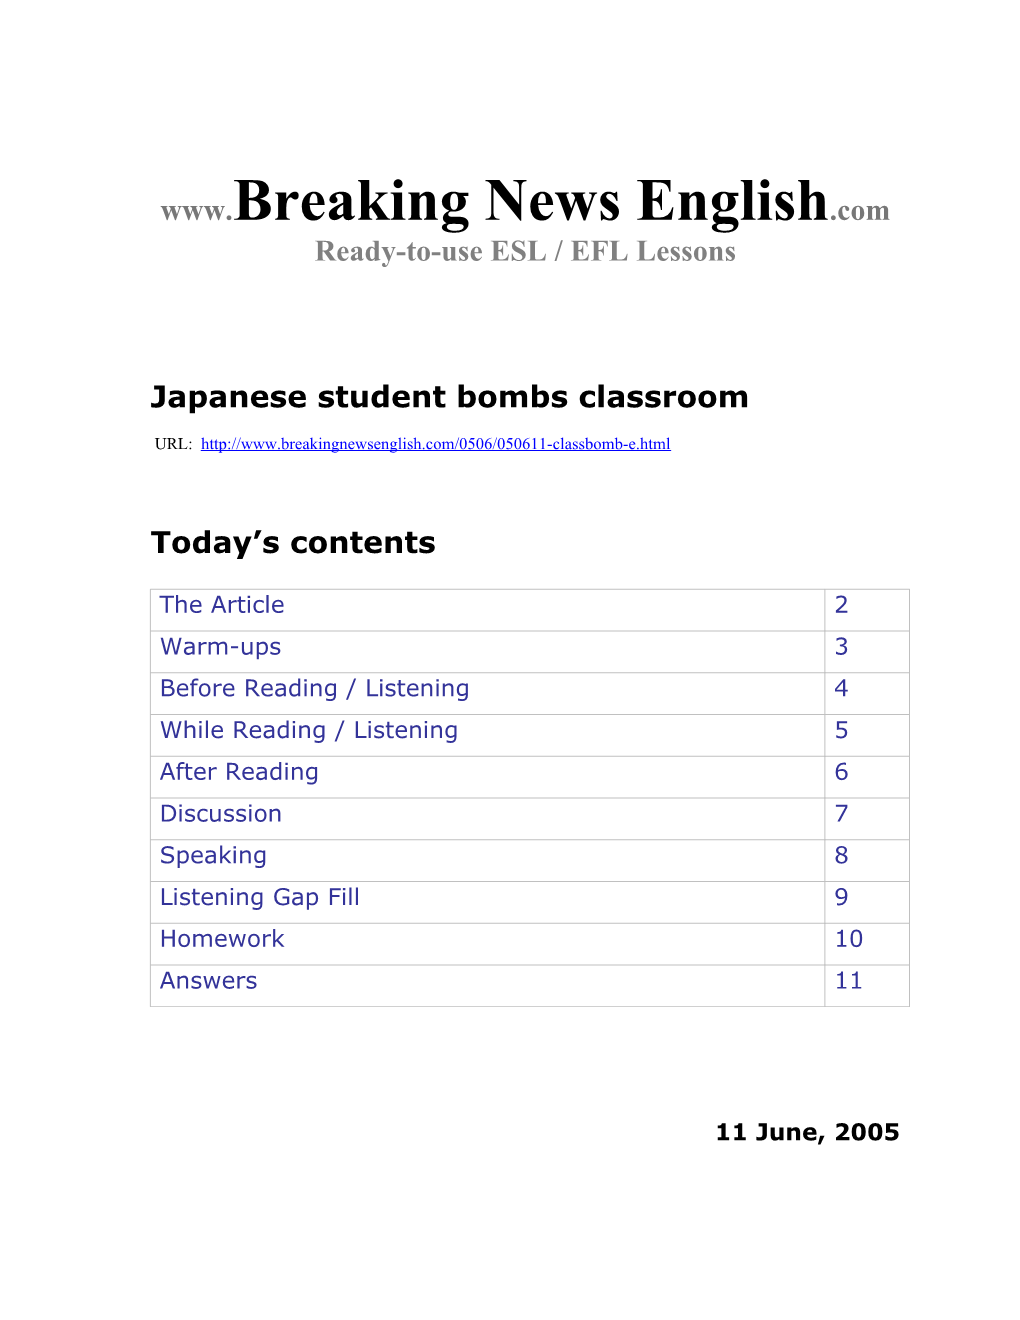 Japanese Student Bombs Classroom